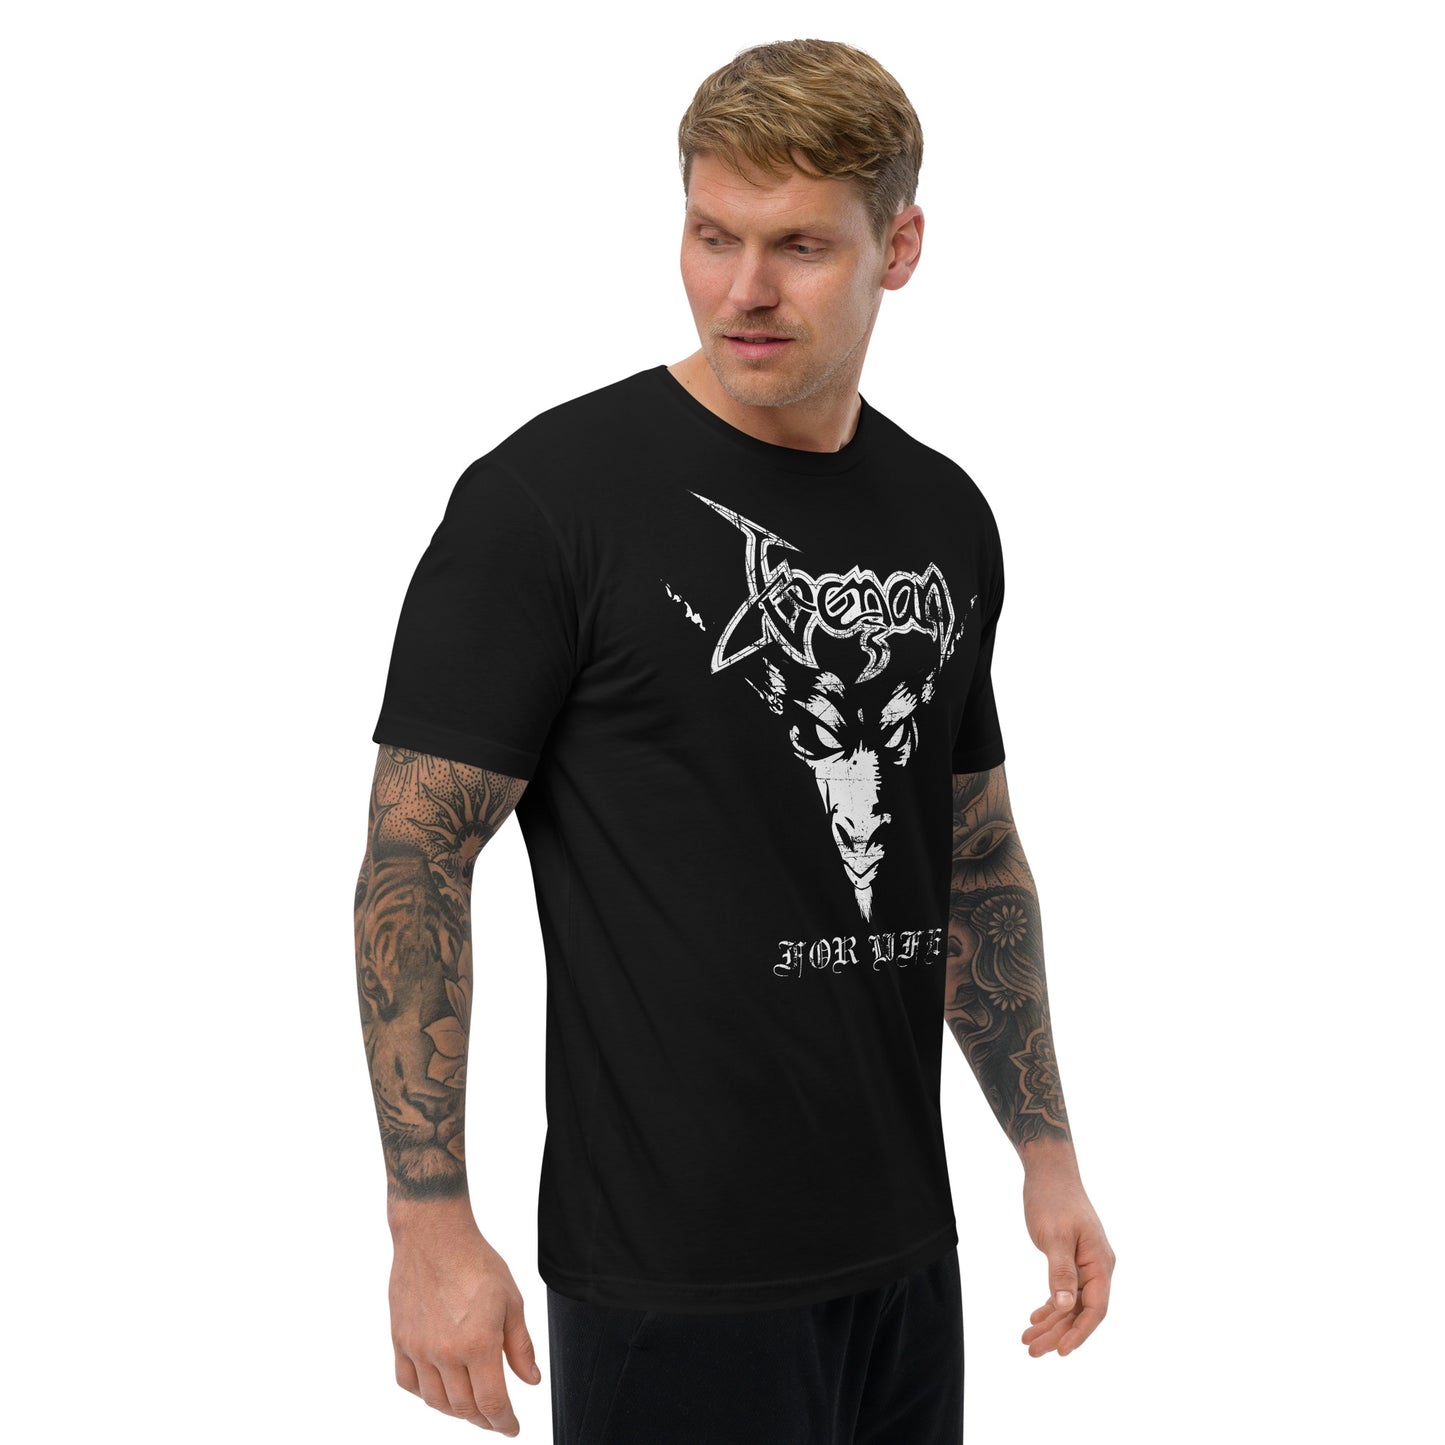 Black Metal Vegan Short Sleeve T-shirt